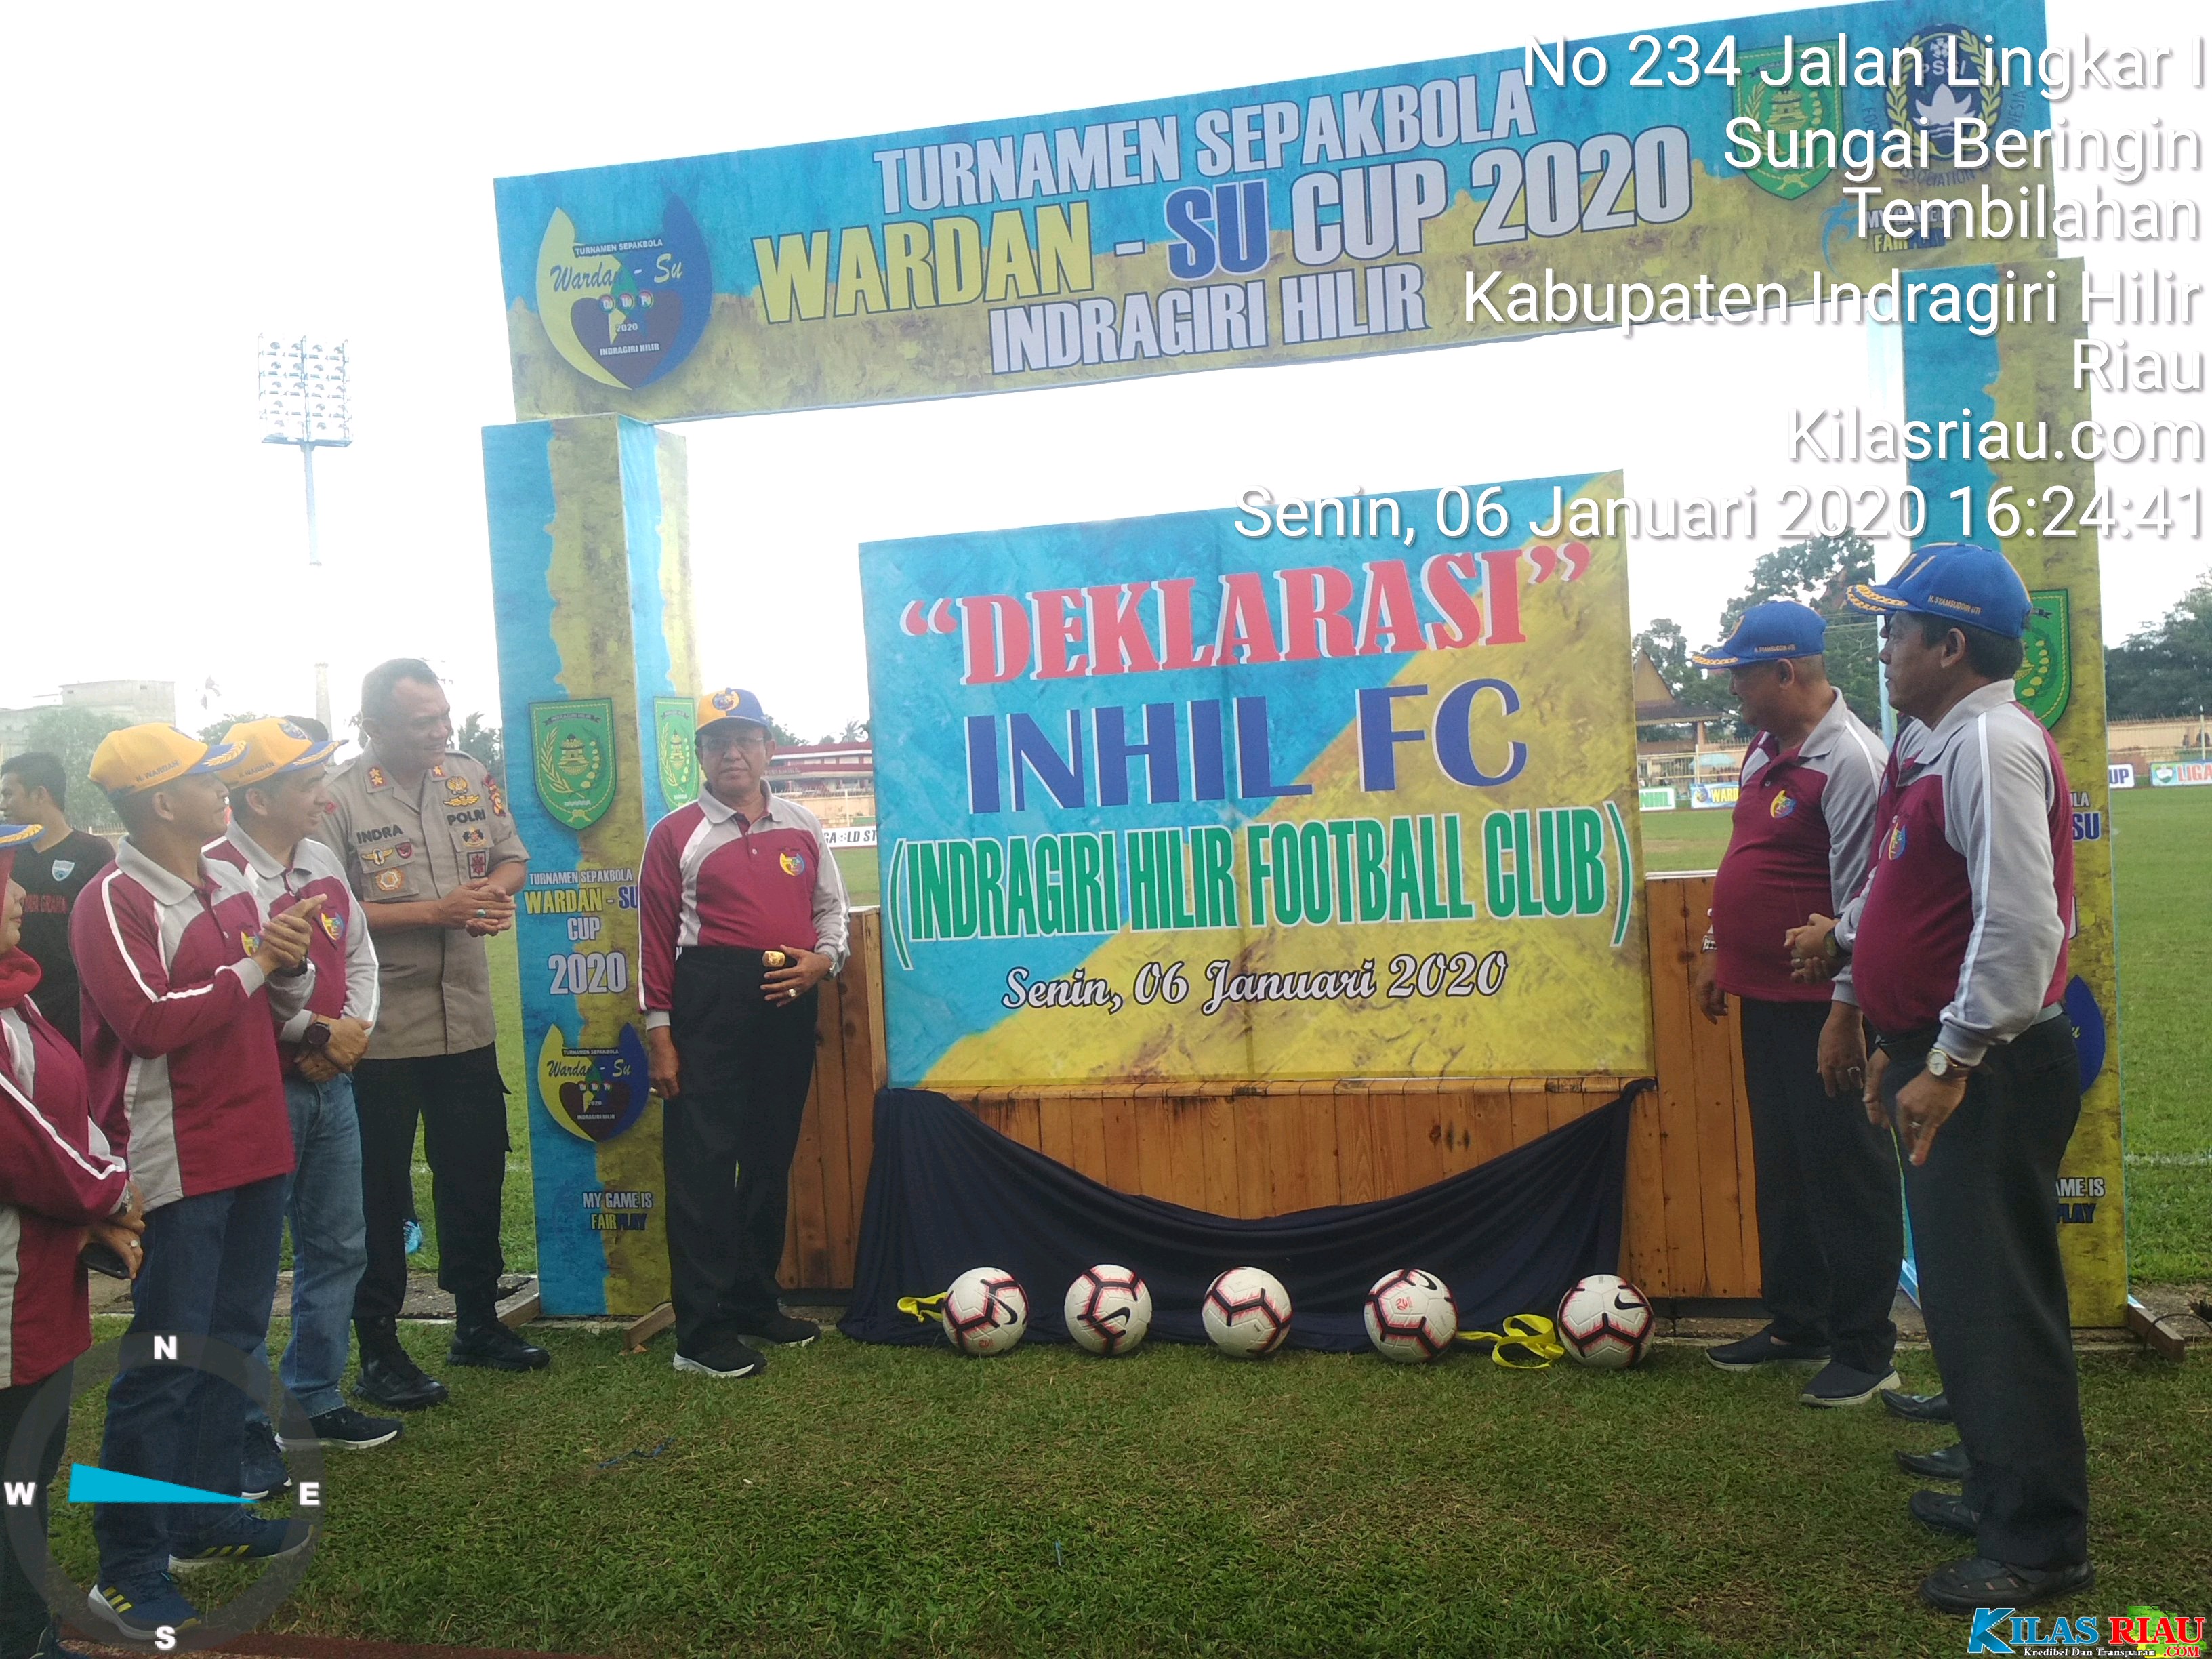 Satu Tahun Memimpin Kabupaten Inhil Wardan-Su Buat Turnamen Sepakbola Wardan-SU Cup 2020